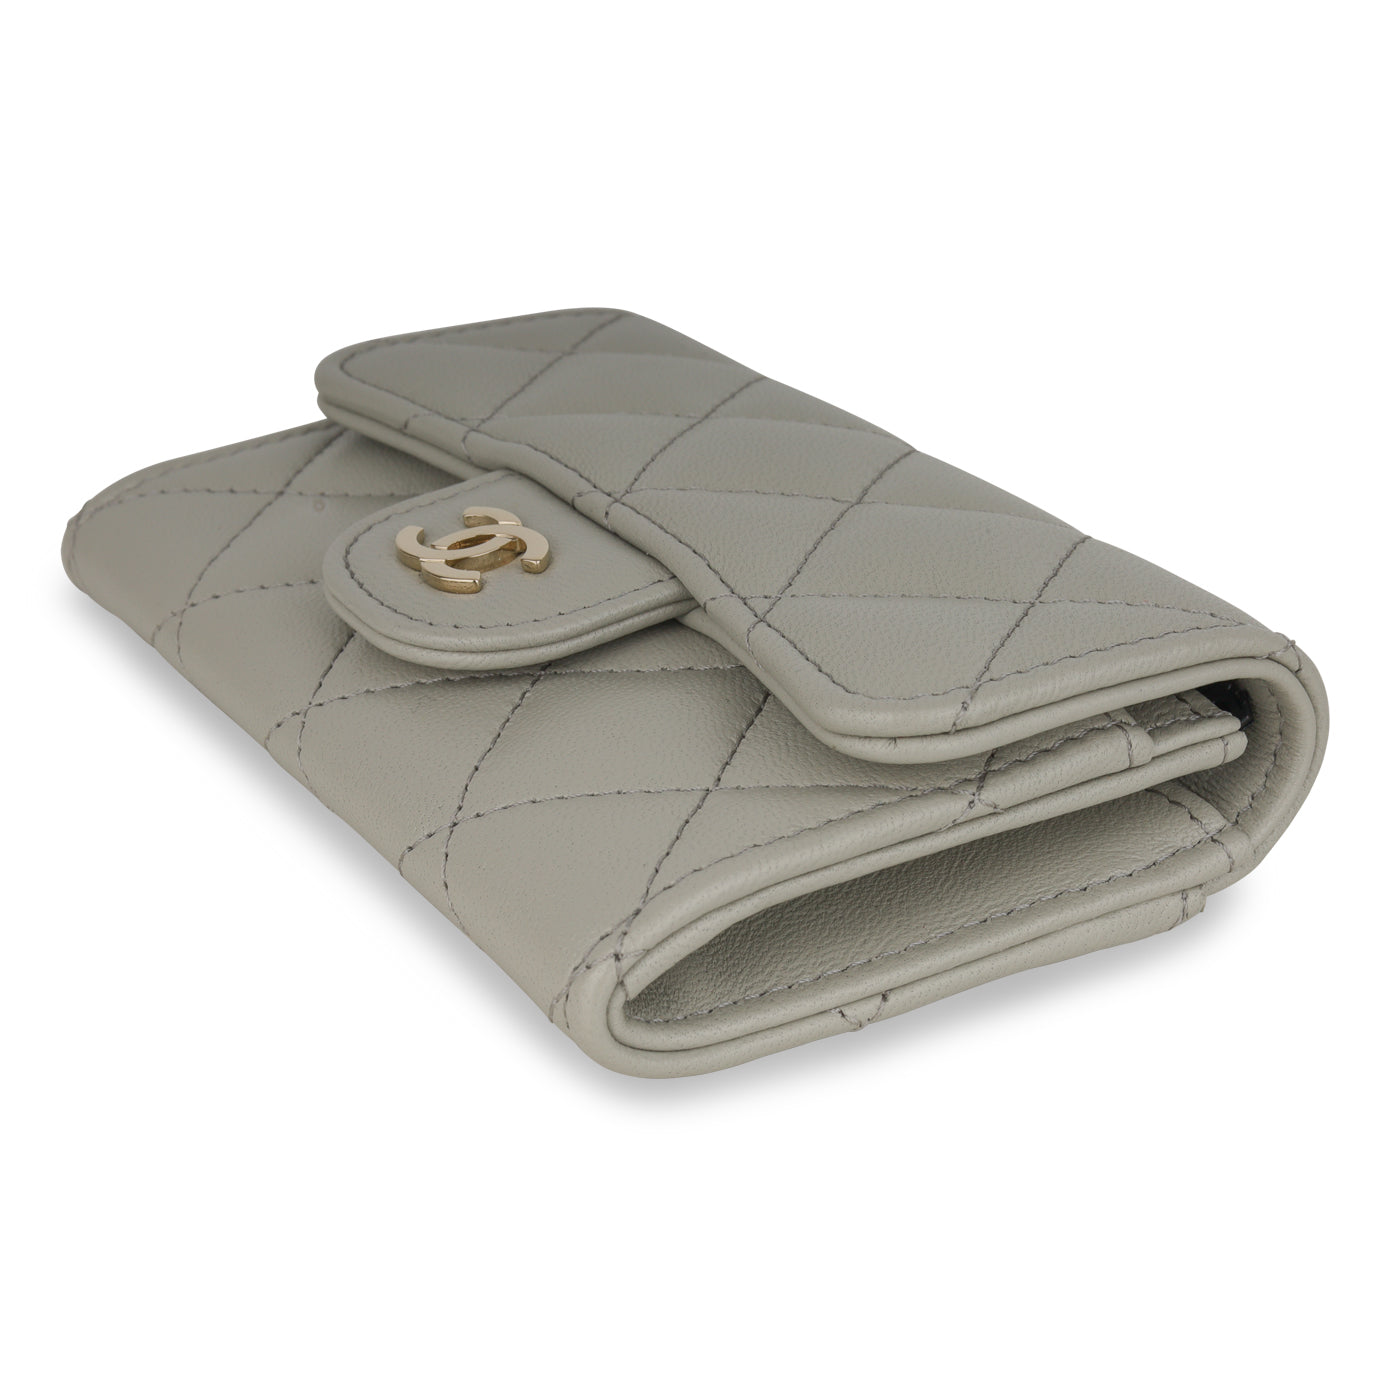 Chanel Card Holder Grey 20C